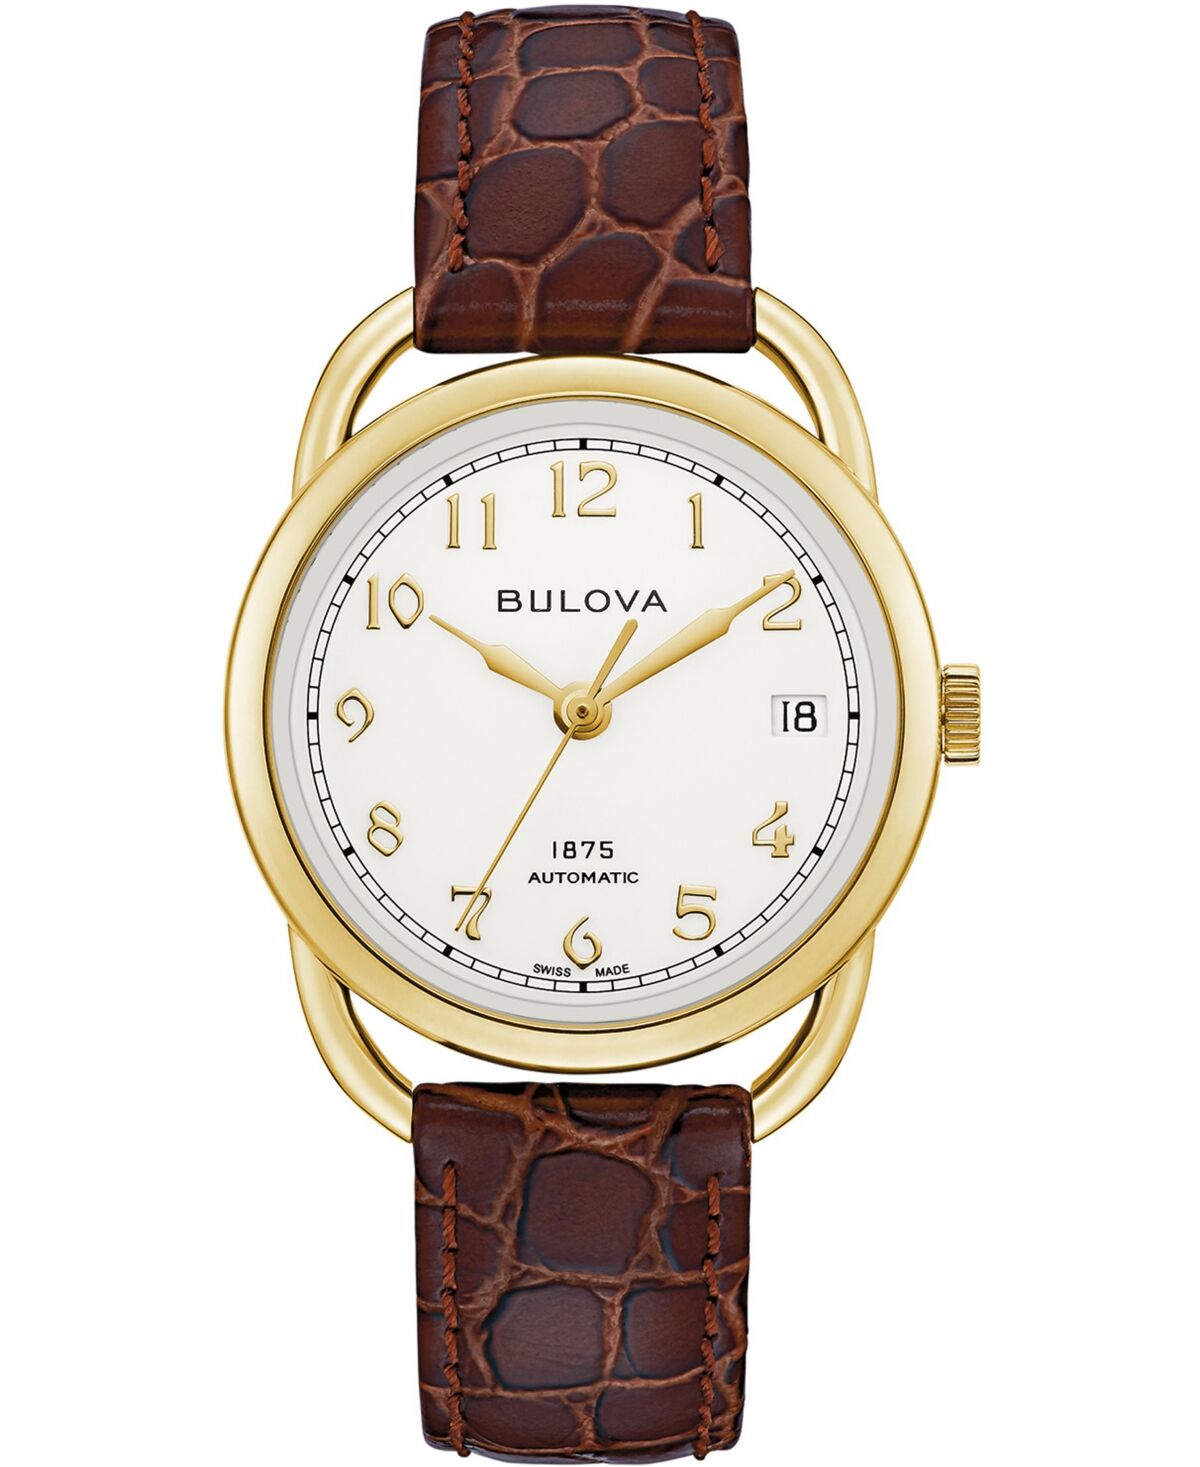 Bulova Limited Edition Bulova Women's Swiss Automatic Joseph Bulova Brown Leather Strap Watch 34.5mm - Brown